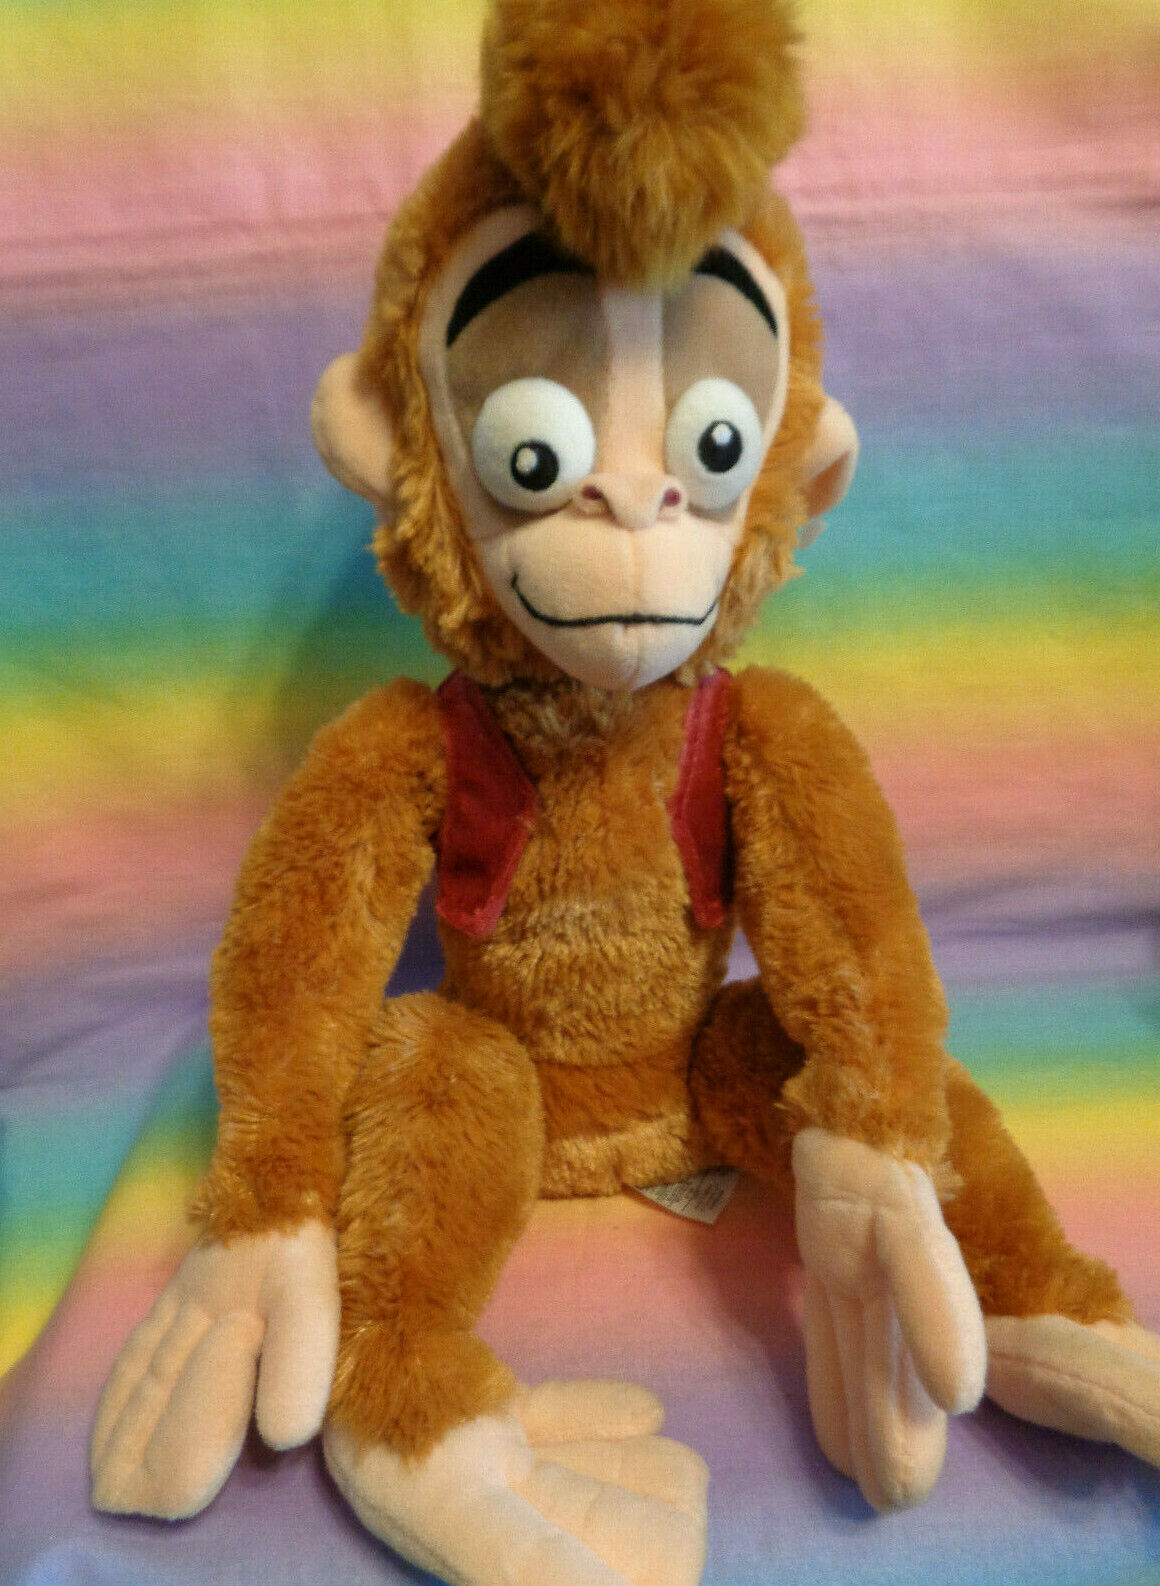 Disney Store Exclusive Authentic Aladdin’s Pet Monkey Abu Plush Animal 15" - $22.51